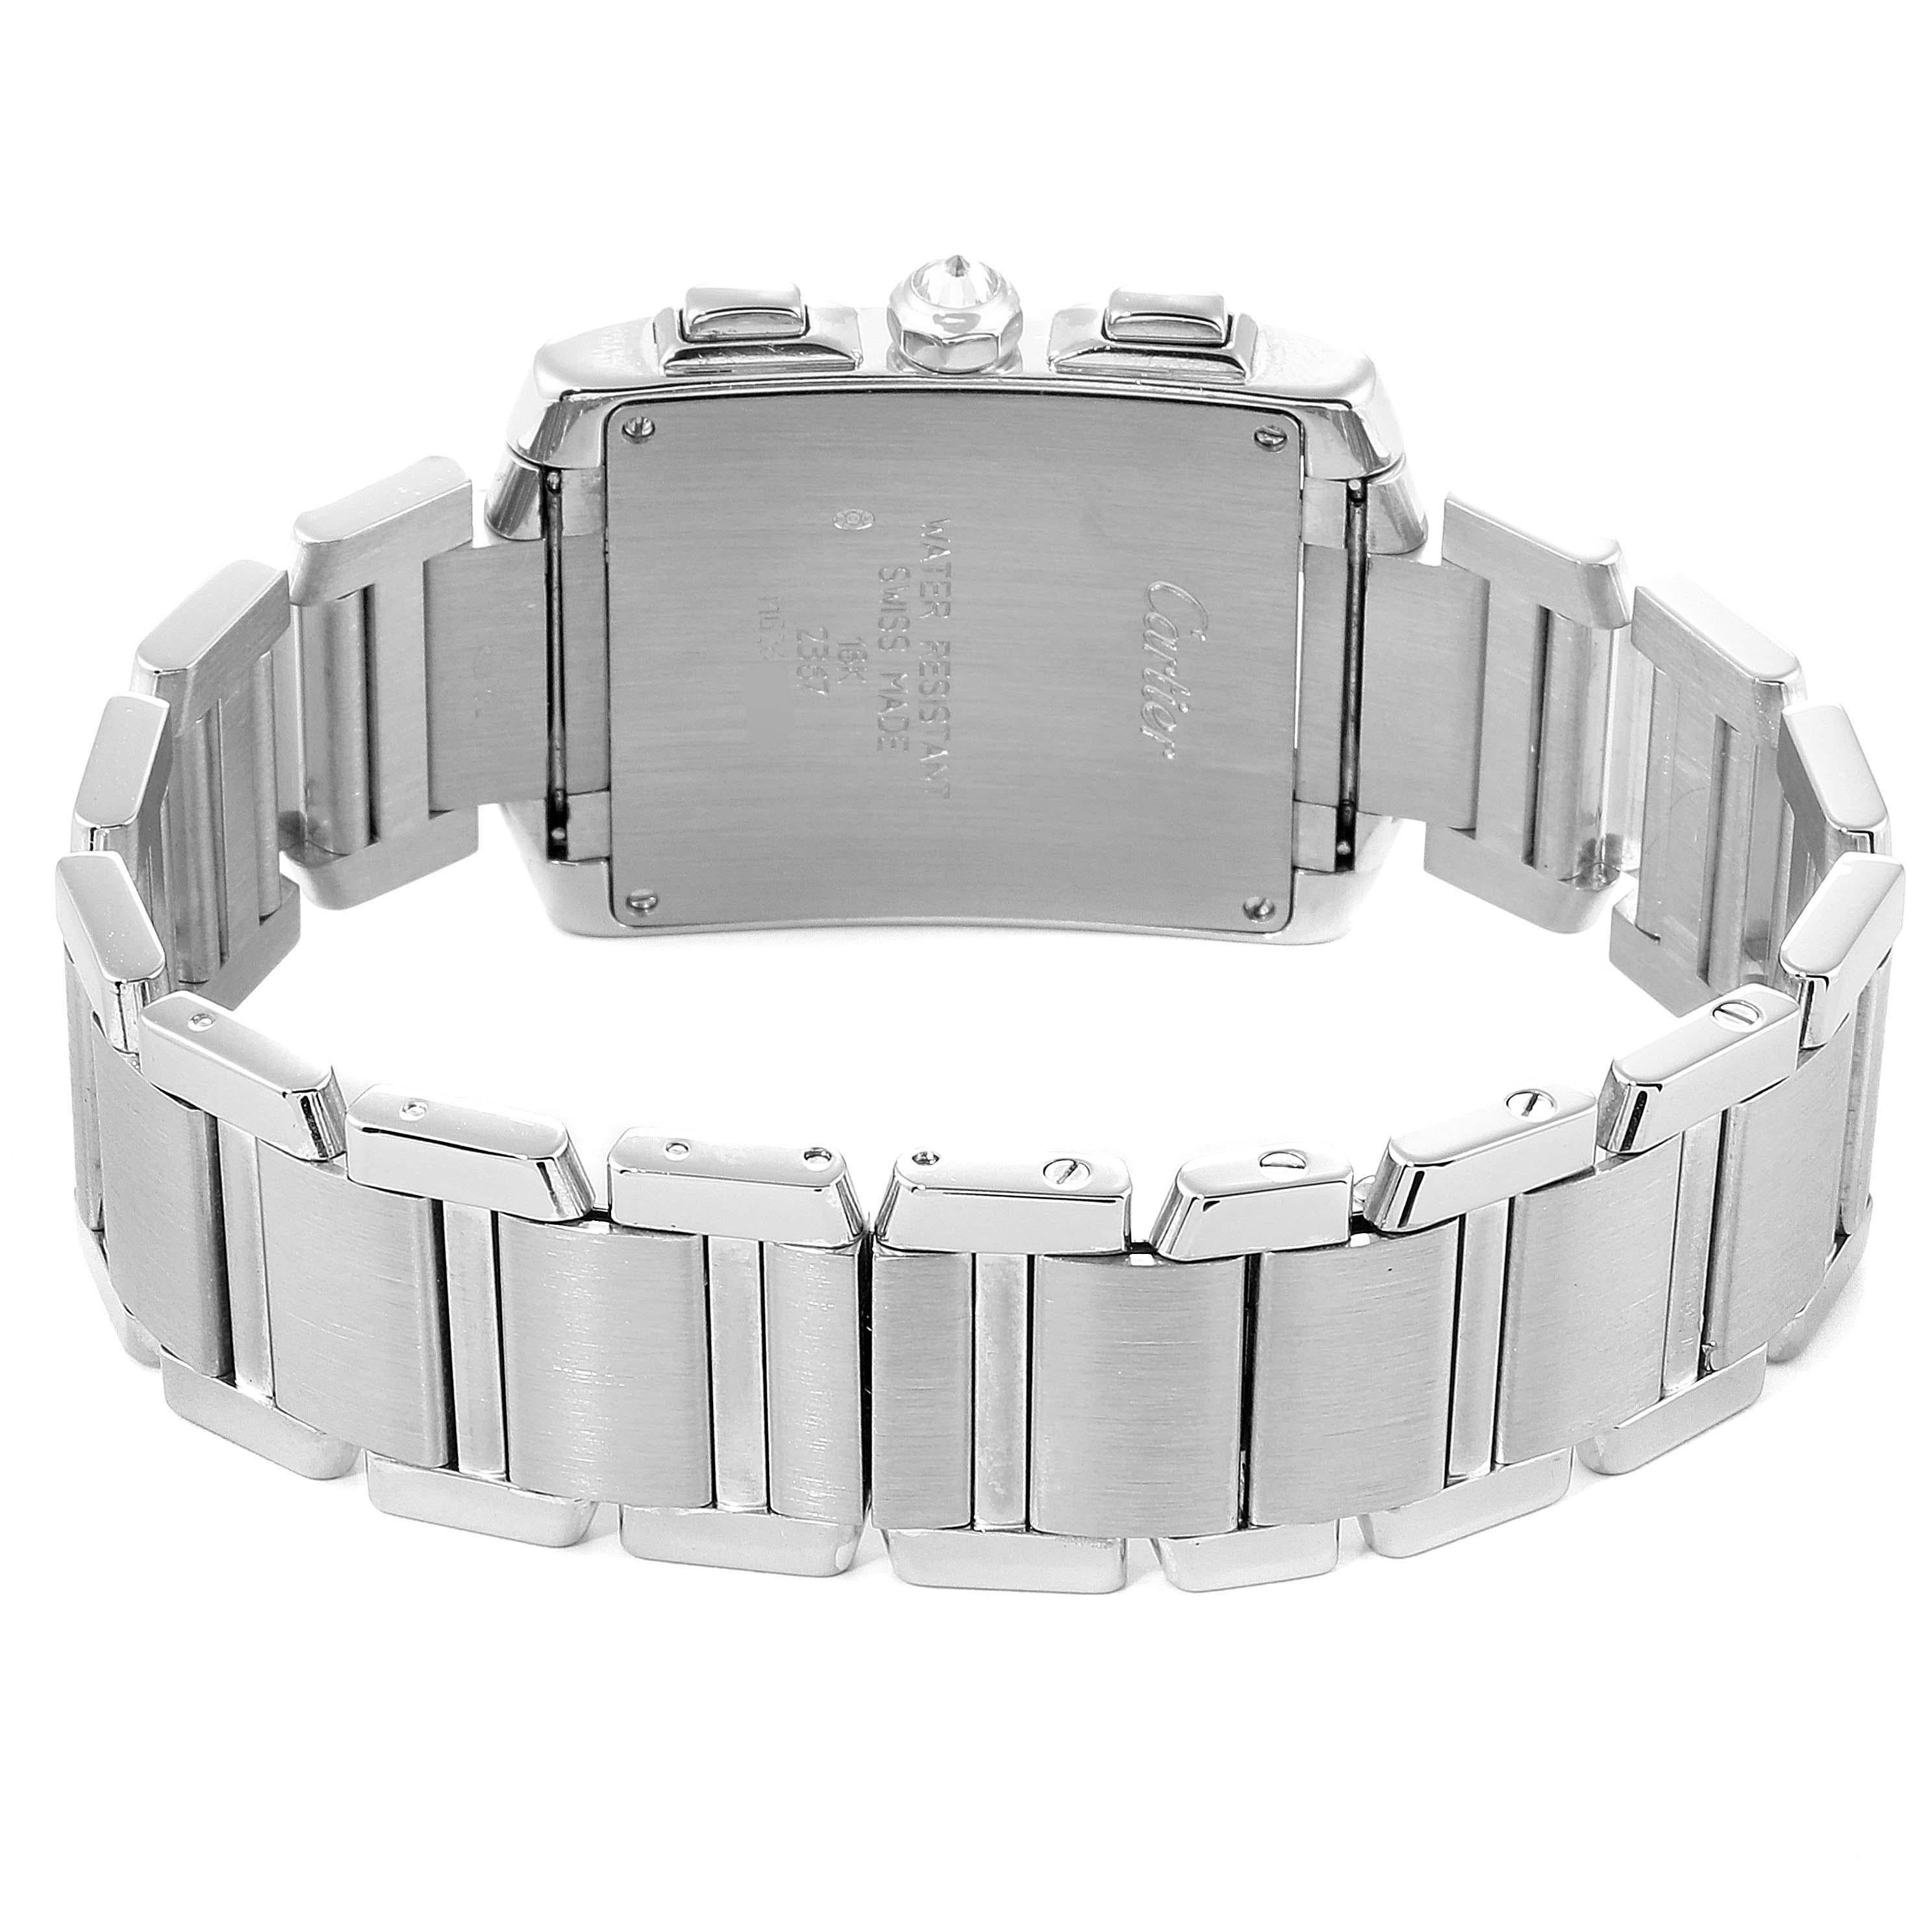 Cartier Tank Francaise Chrongraph White Gold Diamond Men's Watch 2367 For Sale 2